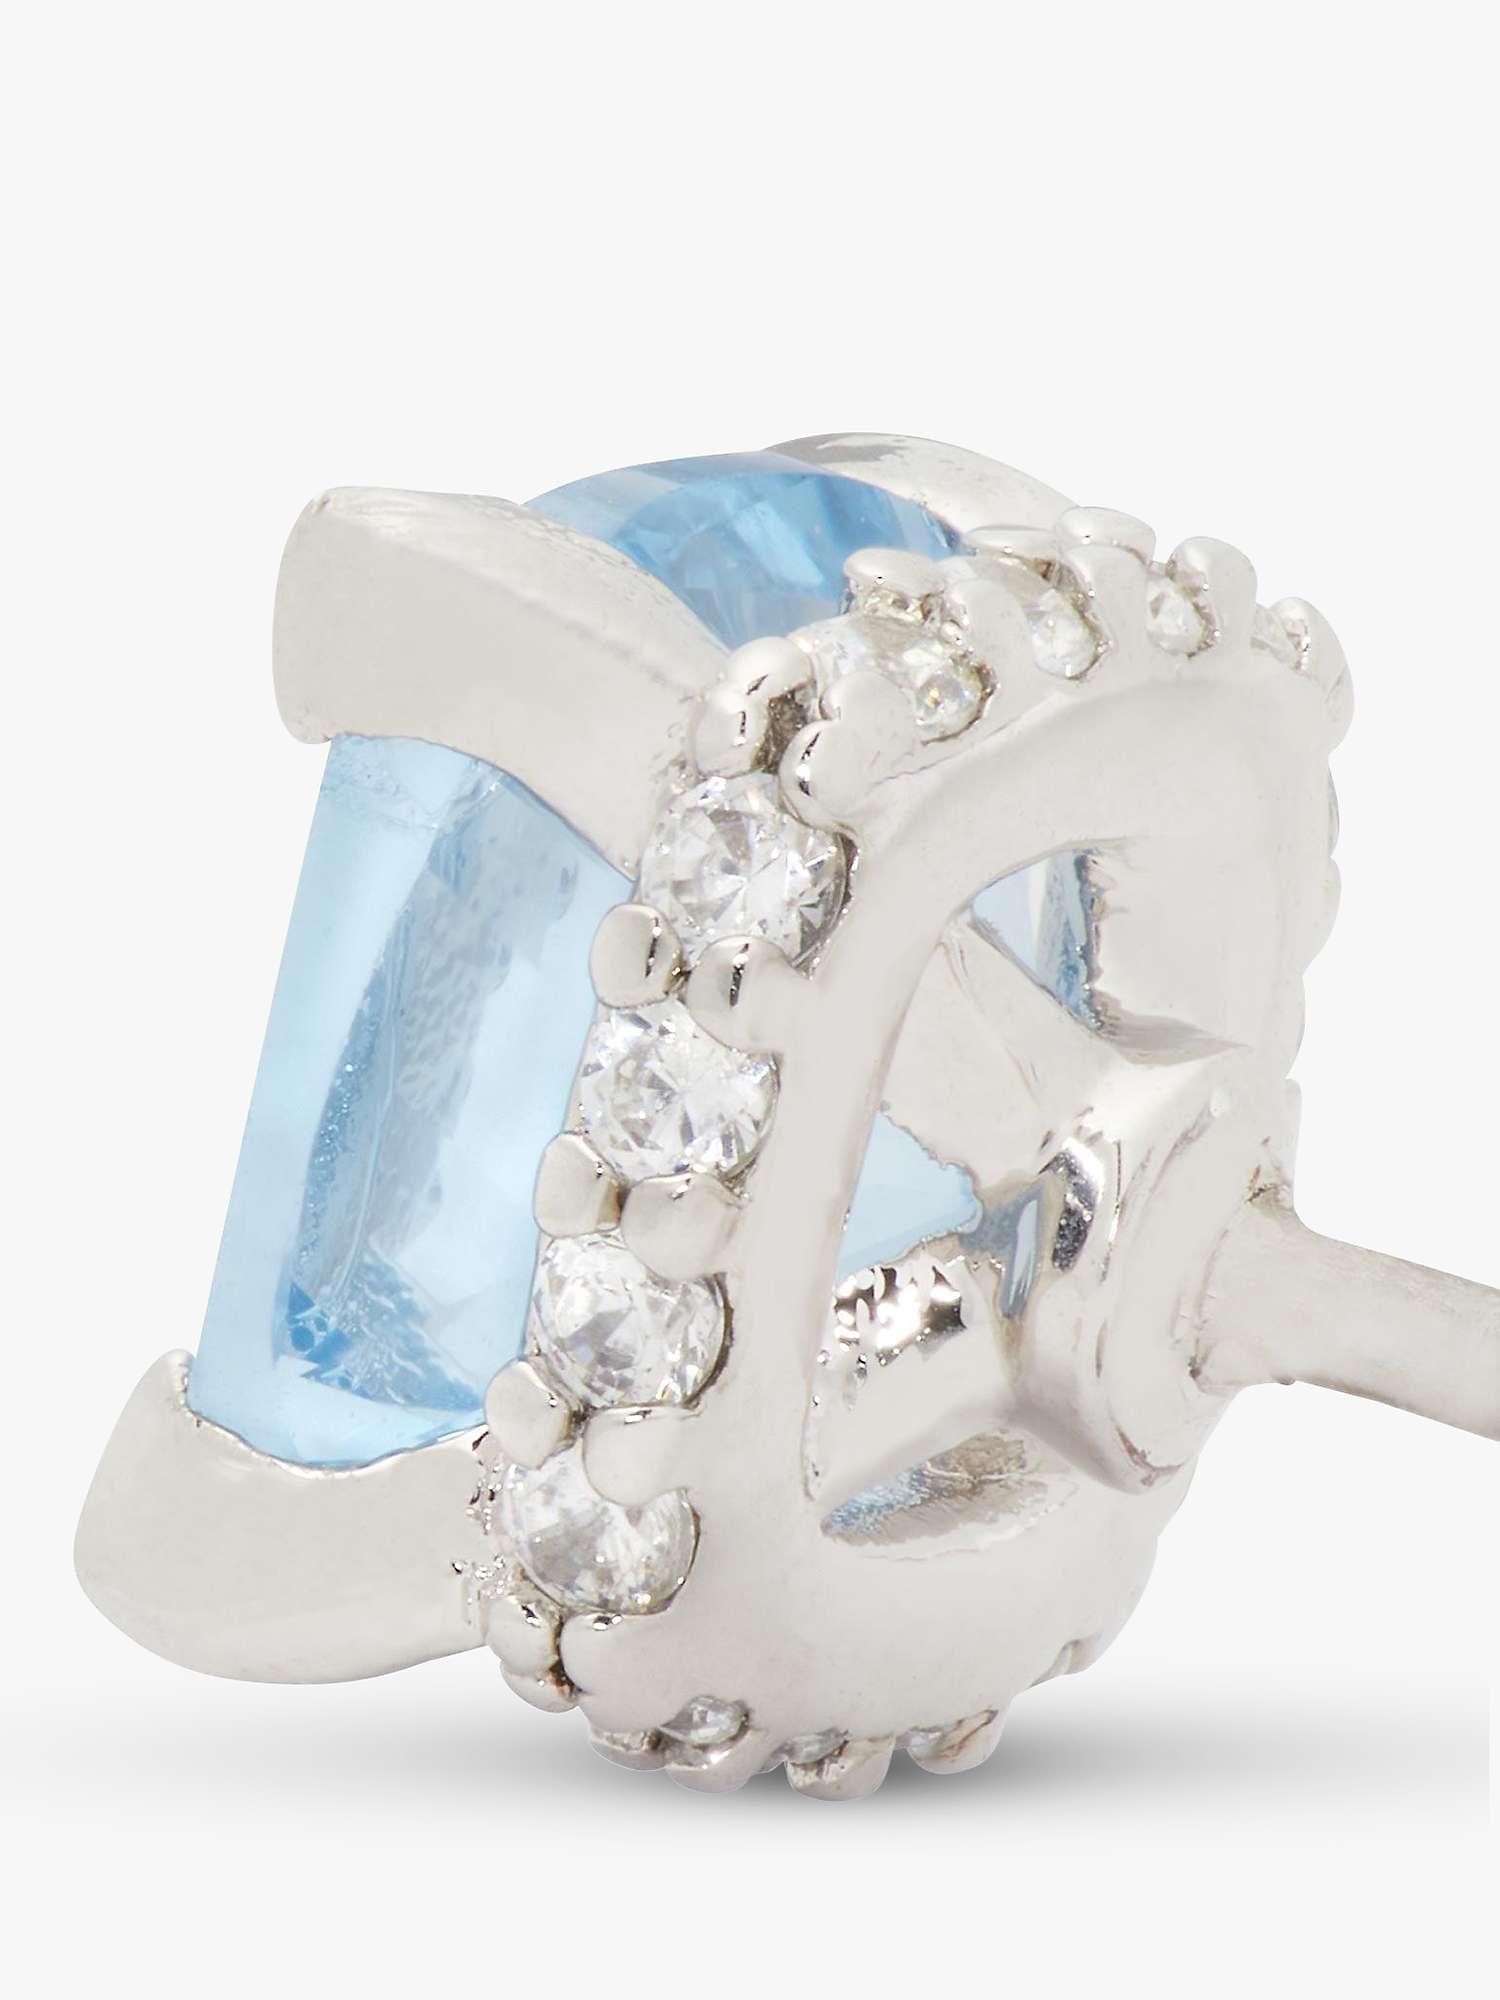 Buy kate spade new york Little Luxuries Cubic Zirconia Square Stud Earrings Online at johnlewis.com